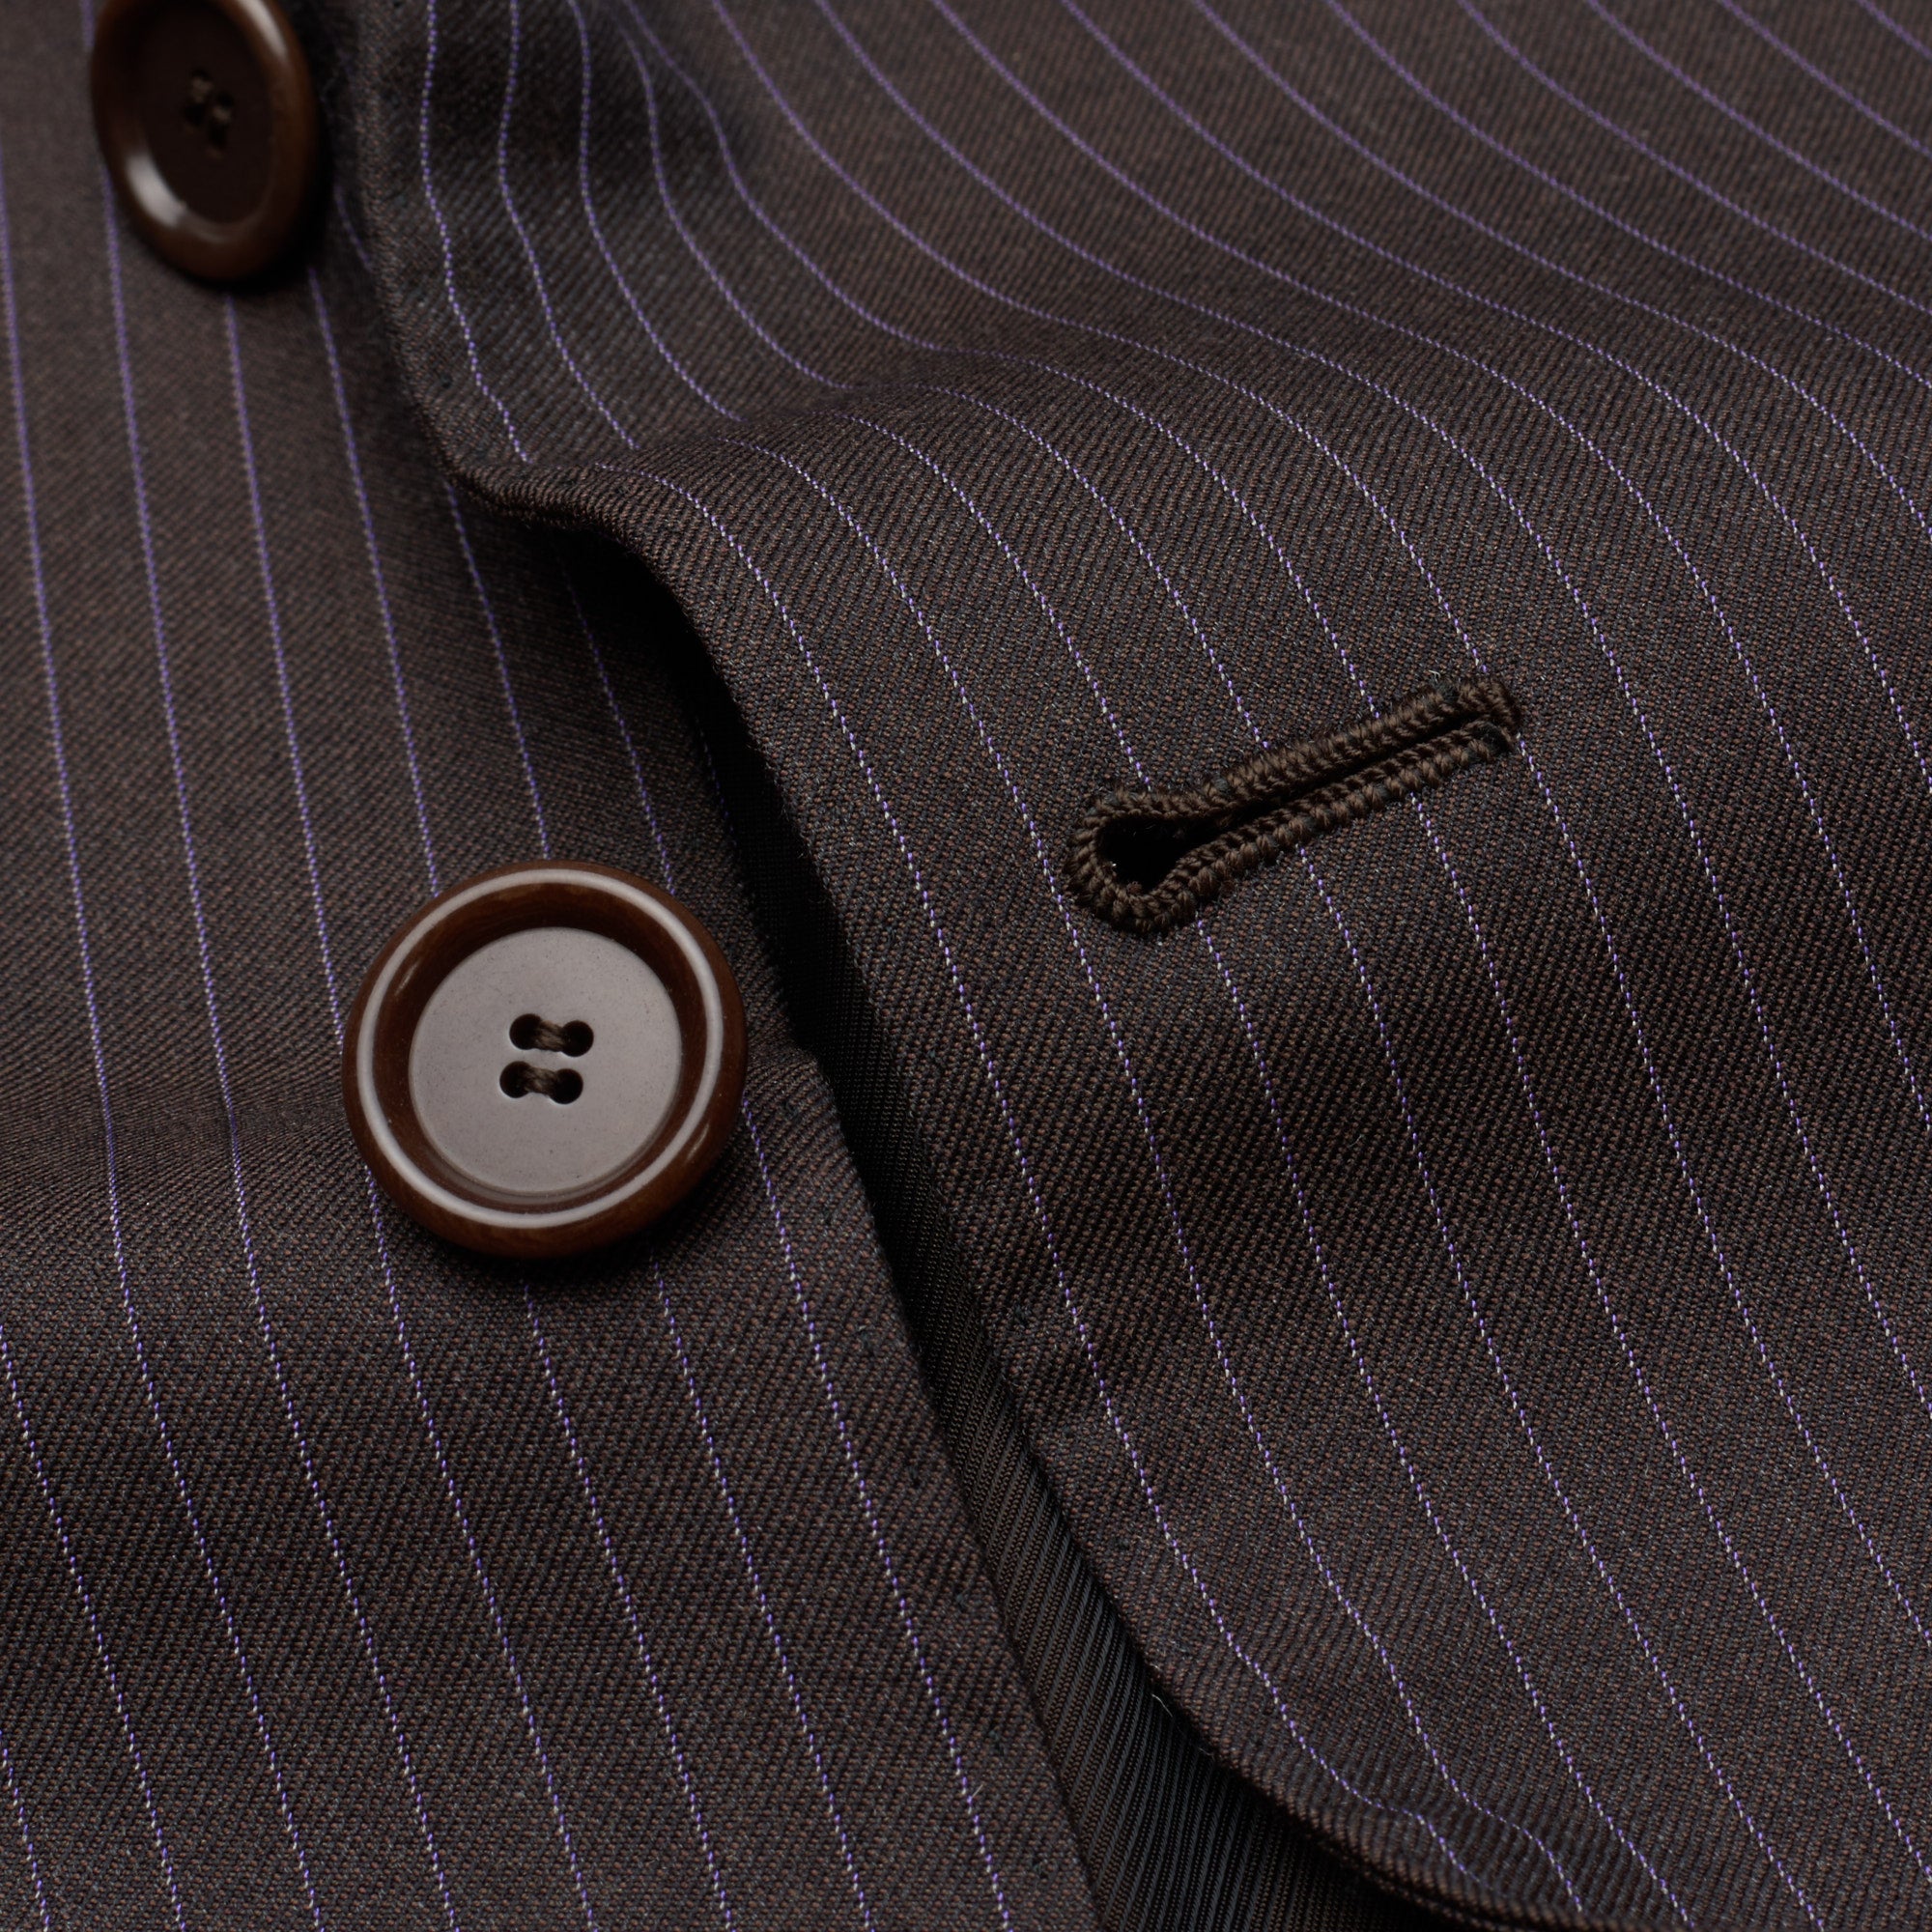 CESARE ATTOLINI Napoli Handmade Brown Striped Wool Super 140's Suit EU 52 US 42